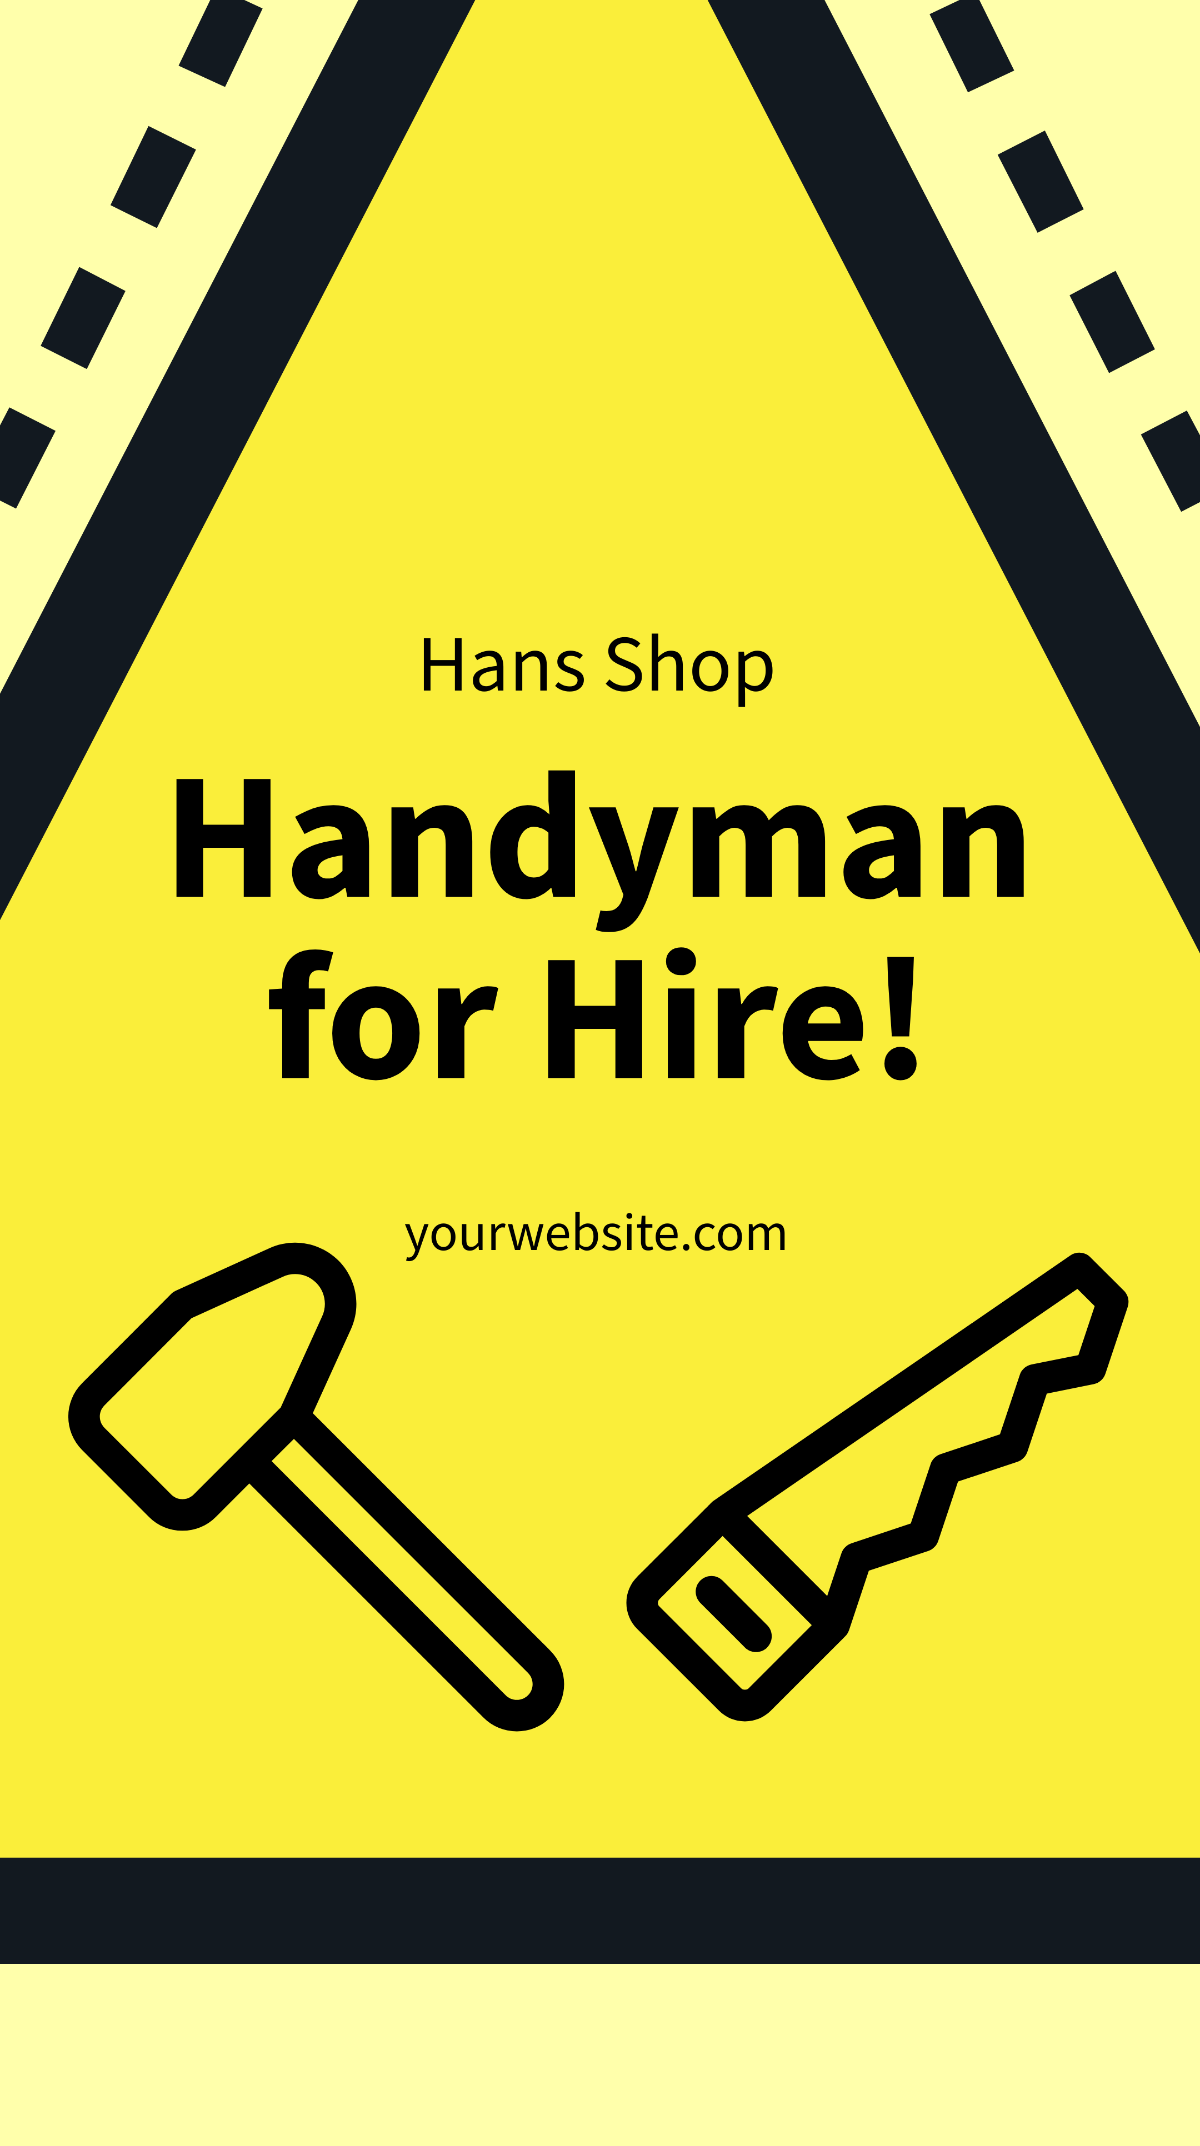 Hiring Handyman Whatsapp Post